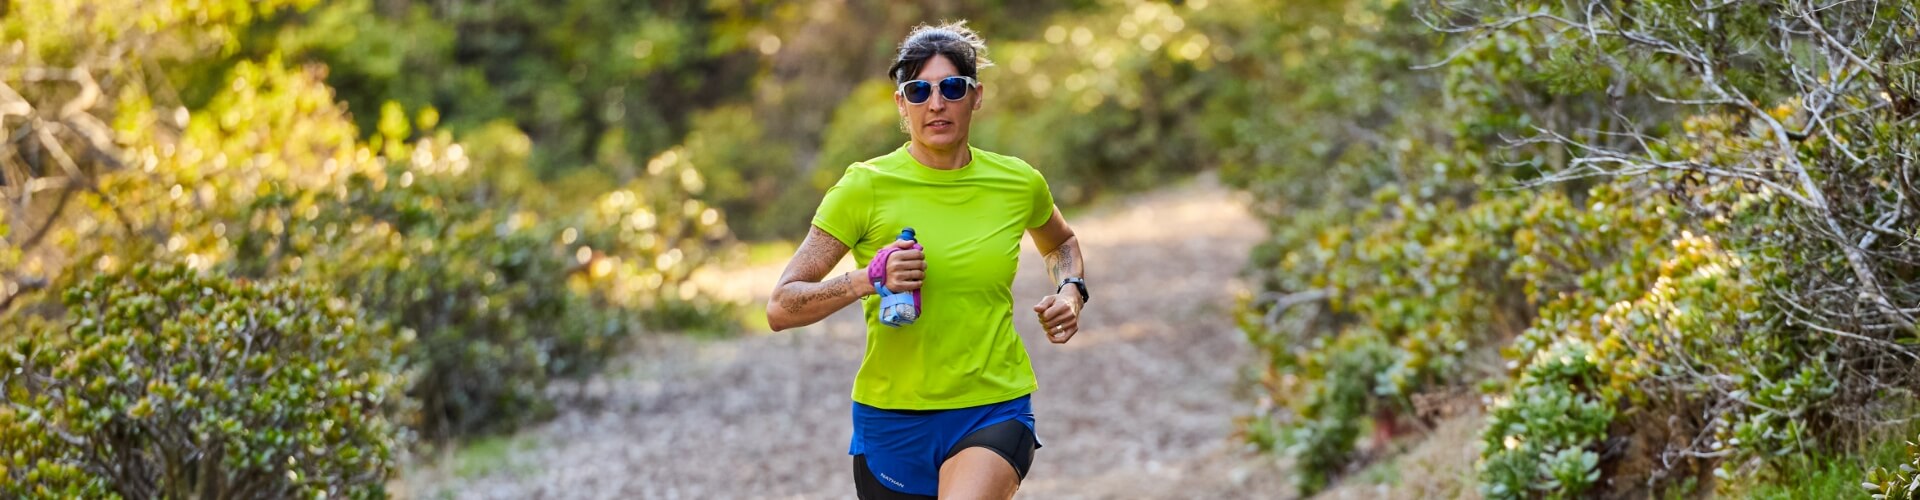 Woman Running In Short Sleeve Shirt